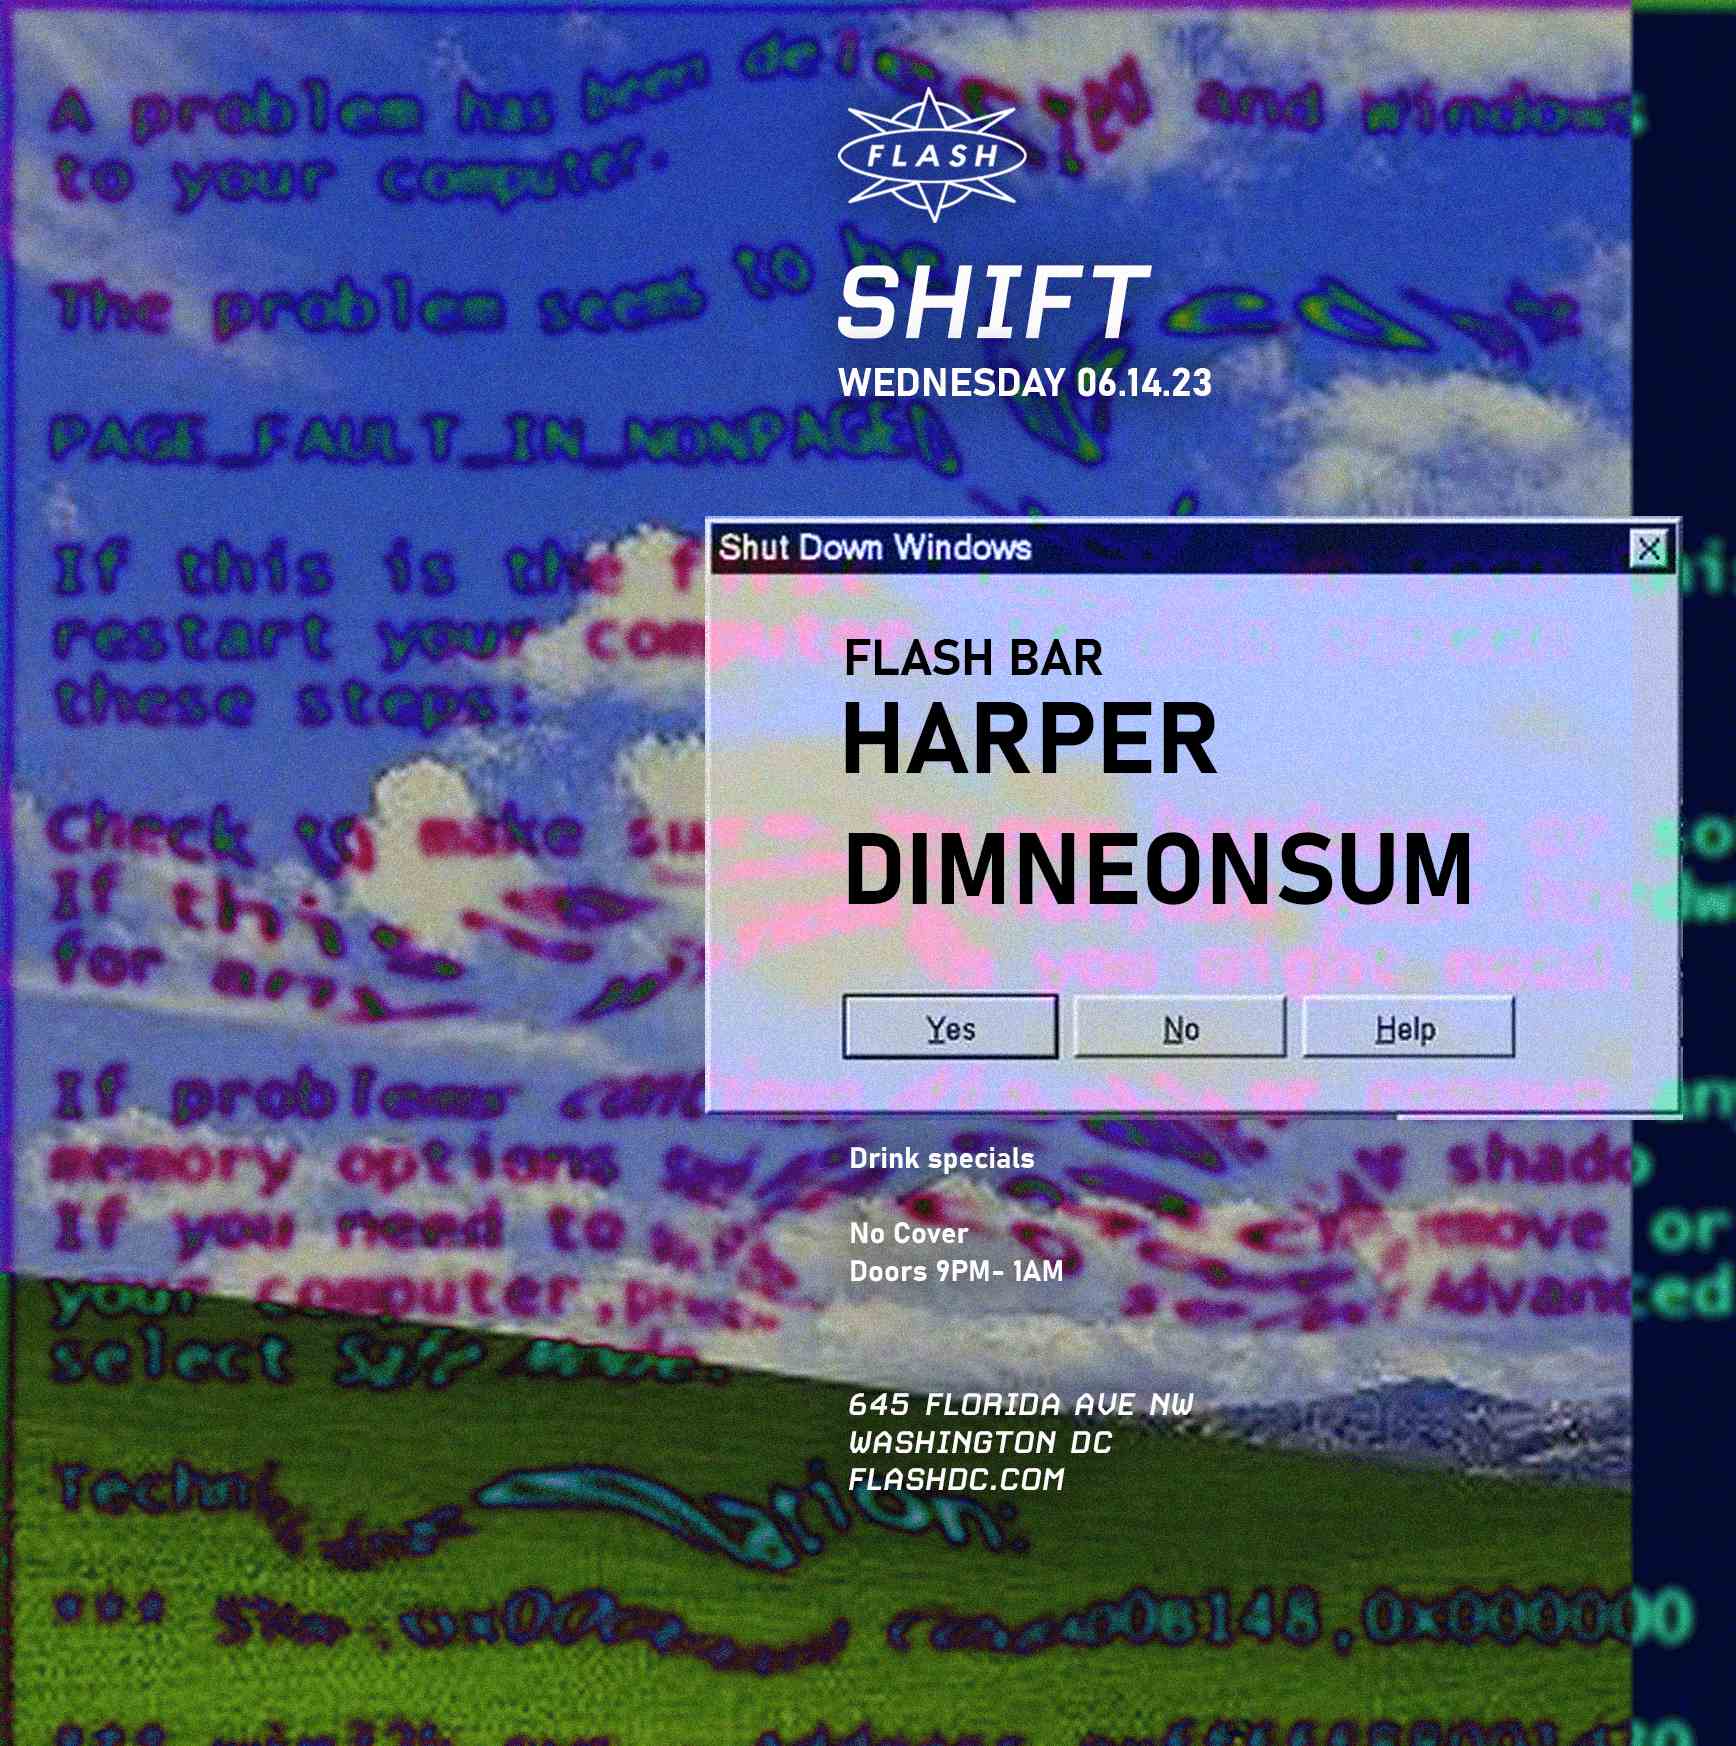 SHIFT: Harper - dimneonsum event flyer